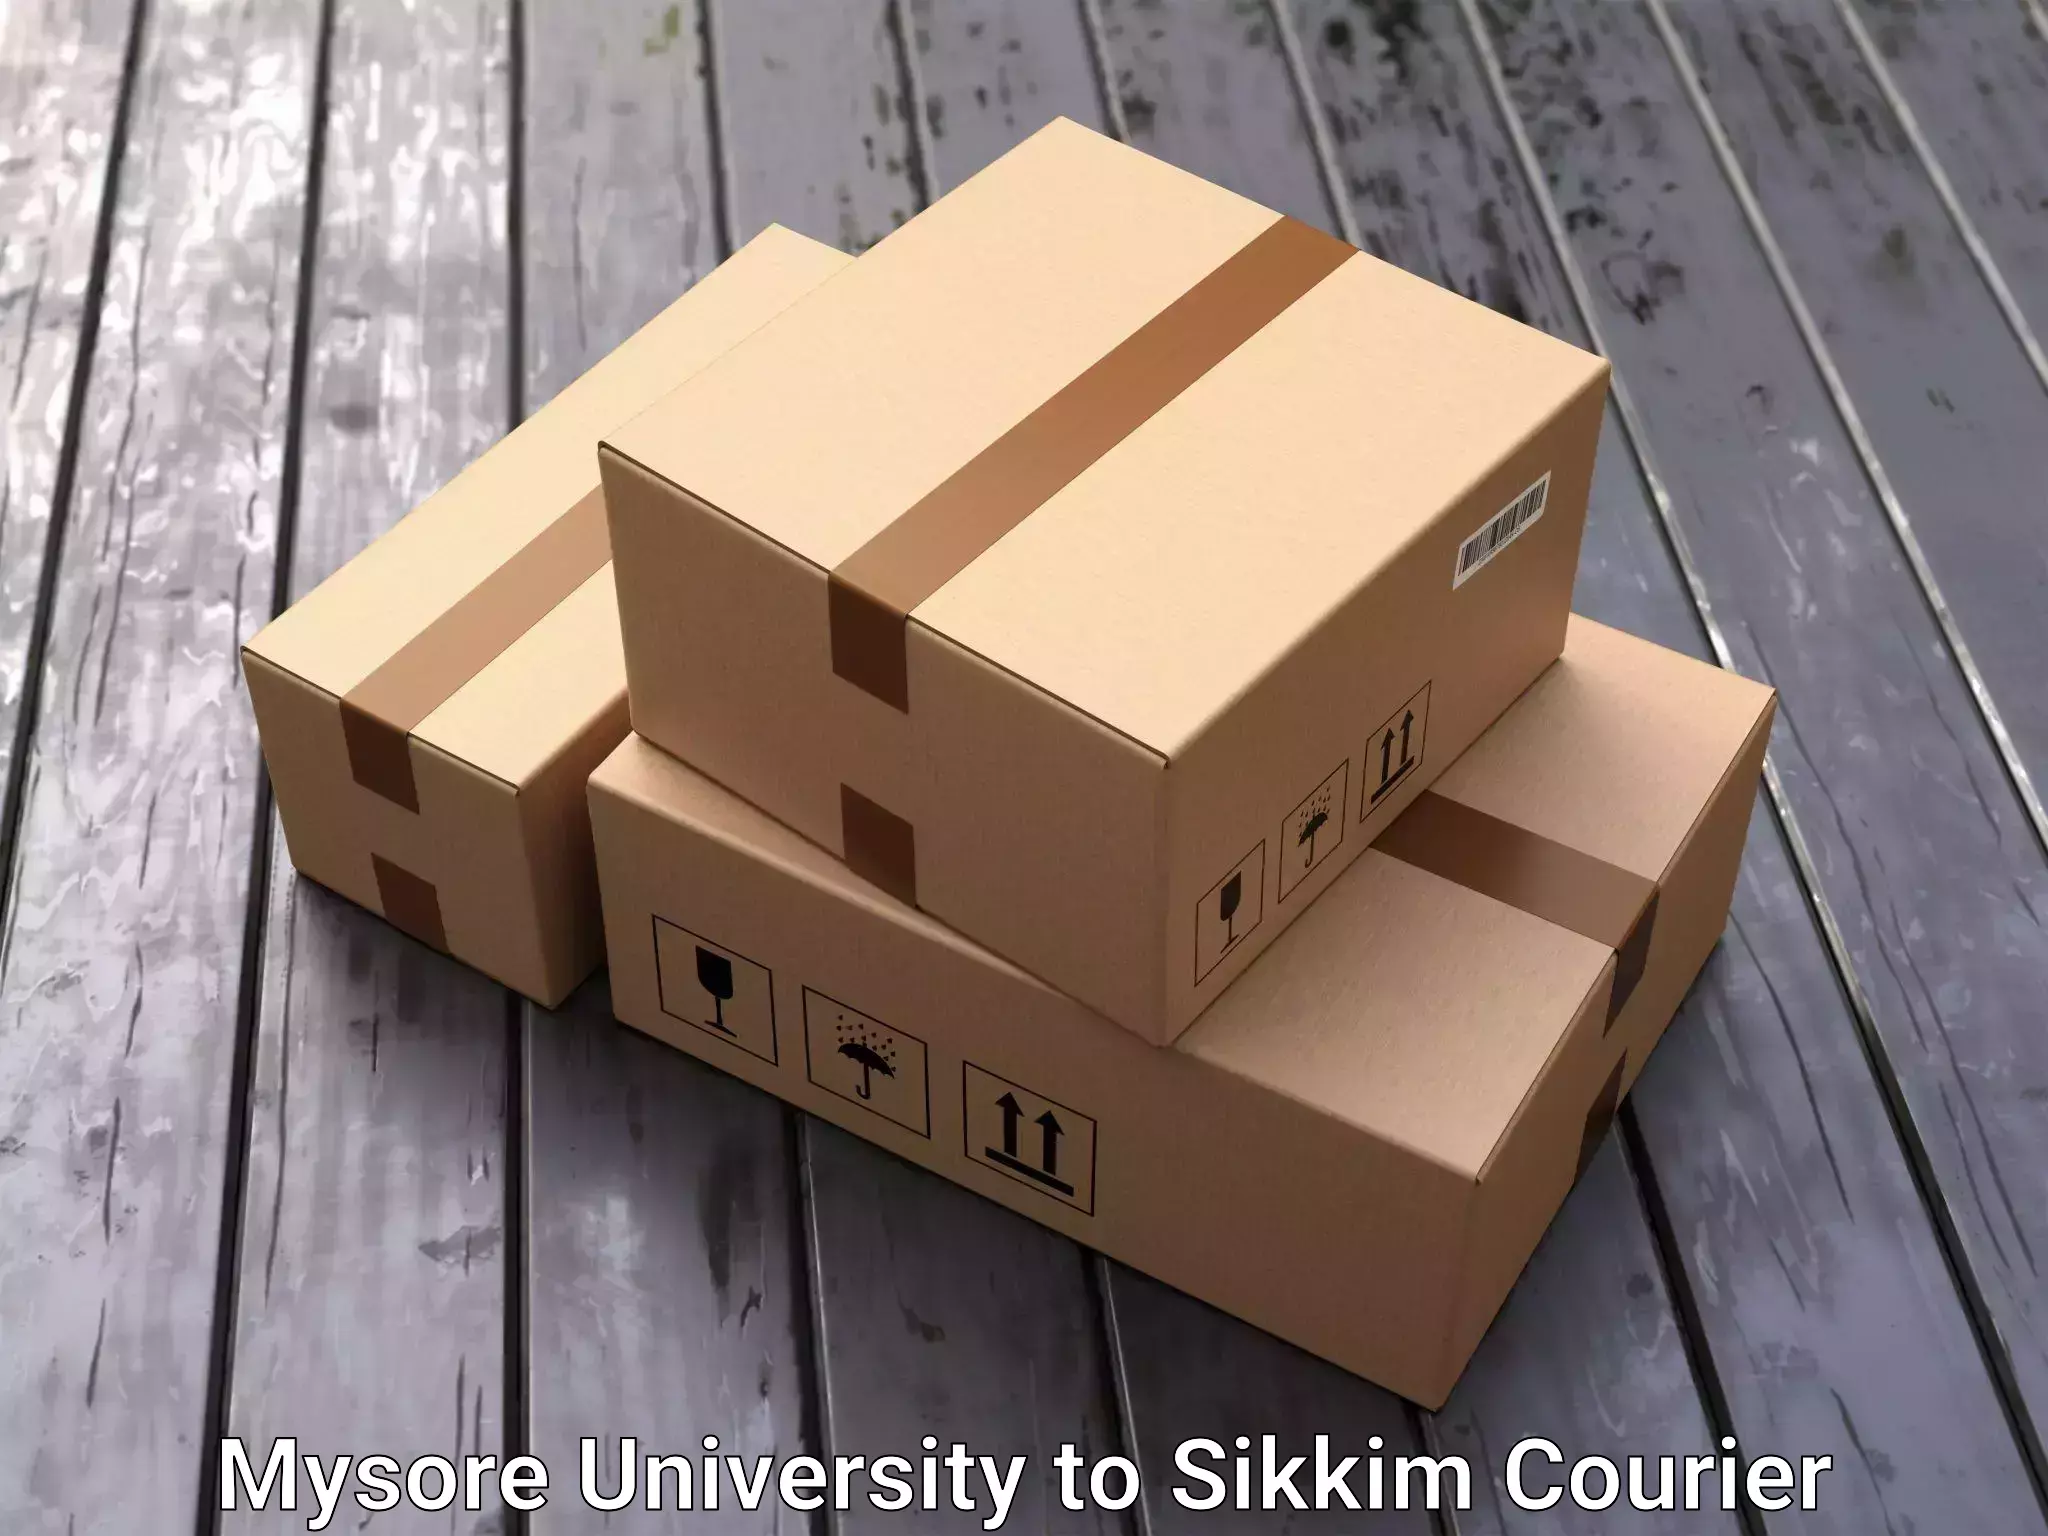 Home shifting experts Mysore University to North Sikkim